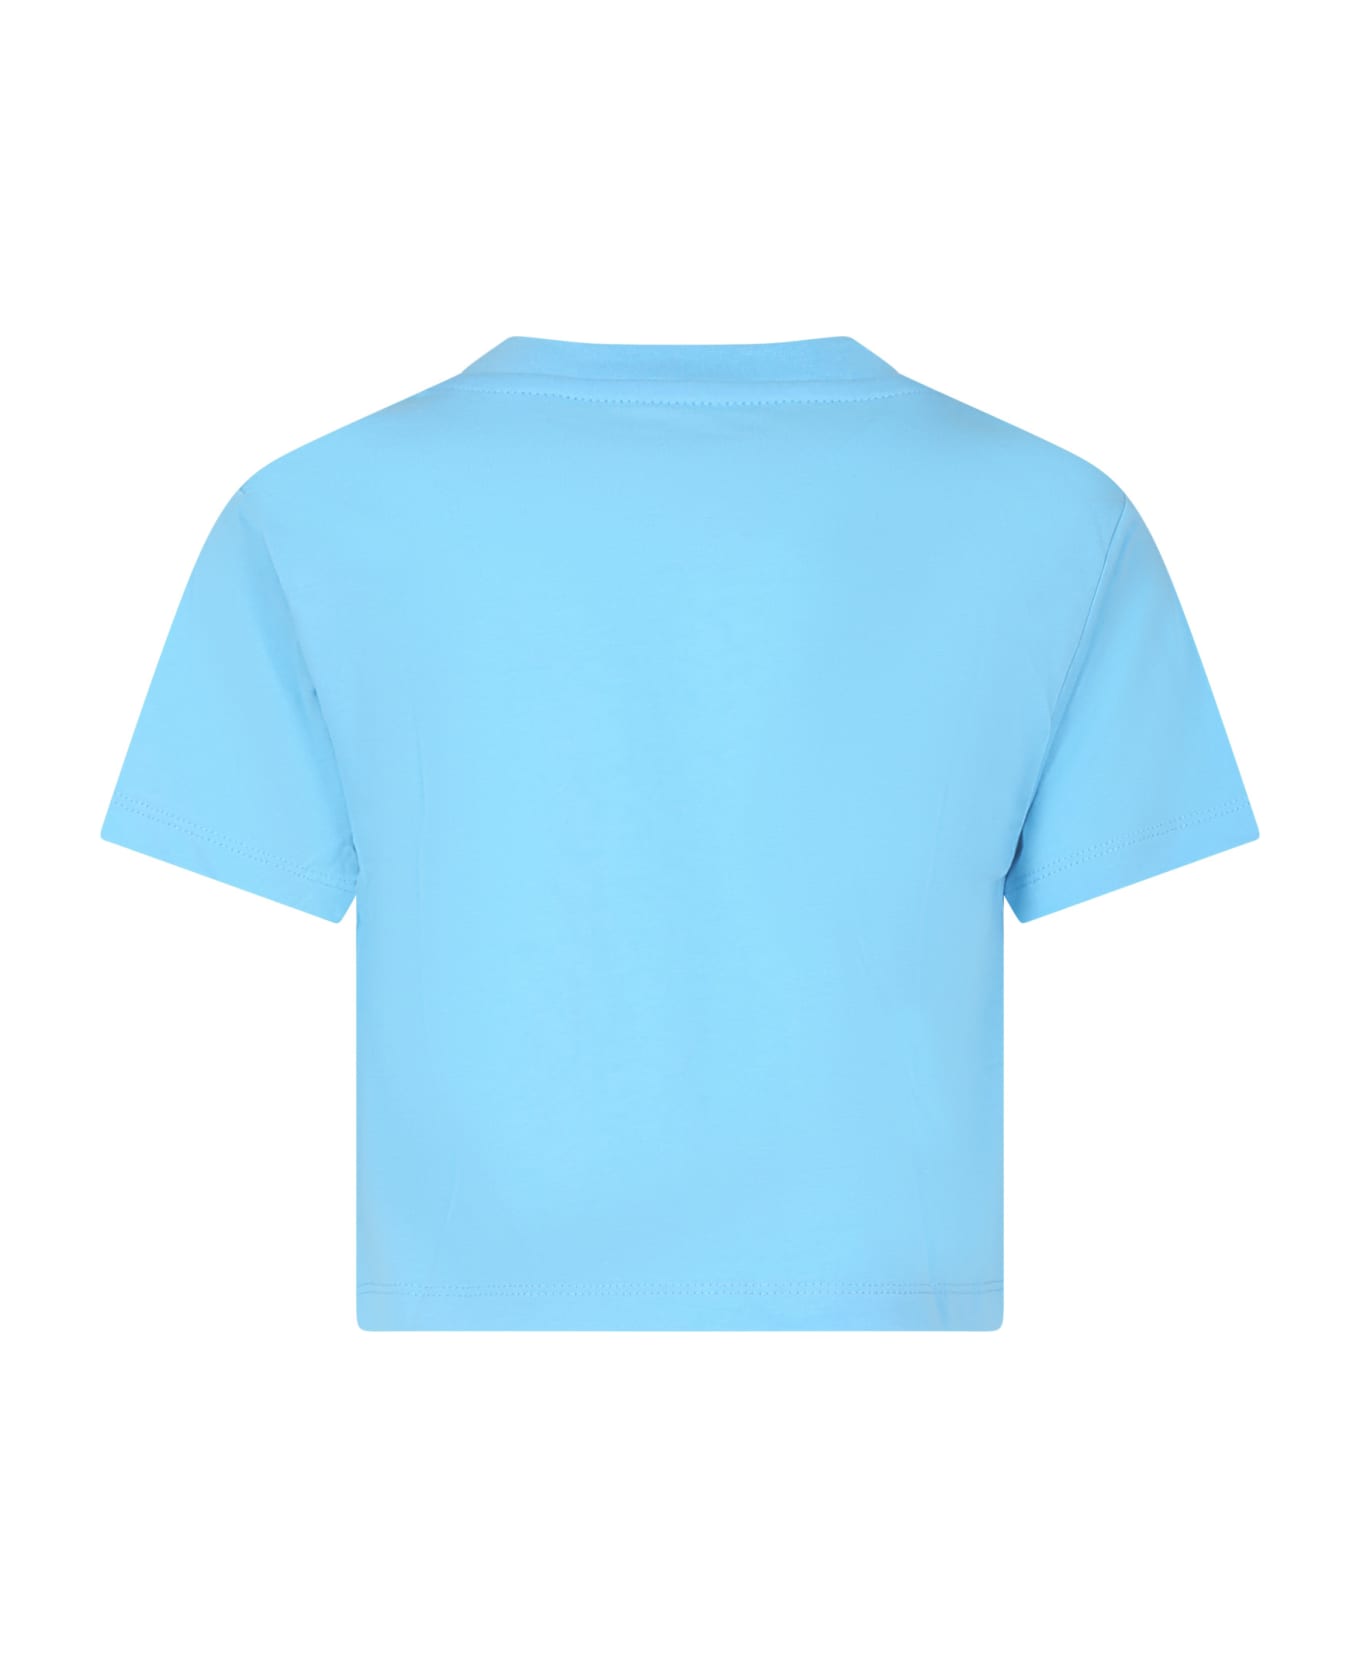 Nike Light Blue T-shirt For Girl With Swoosh - Light Blue